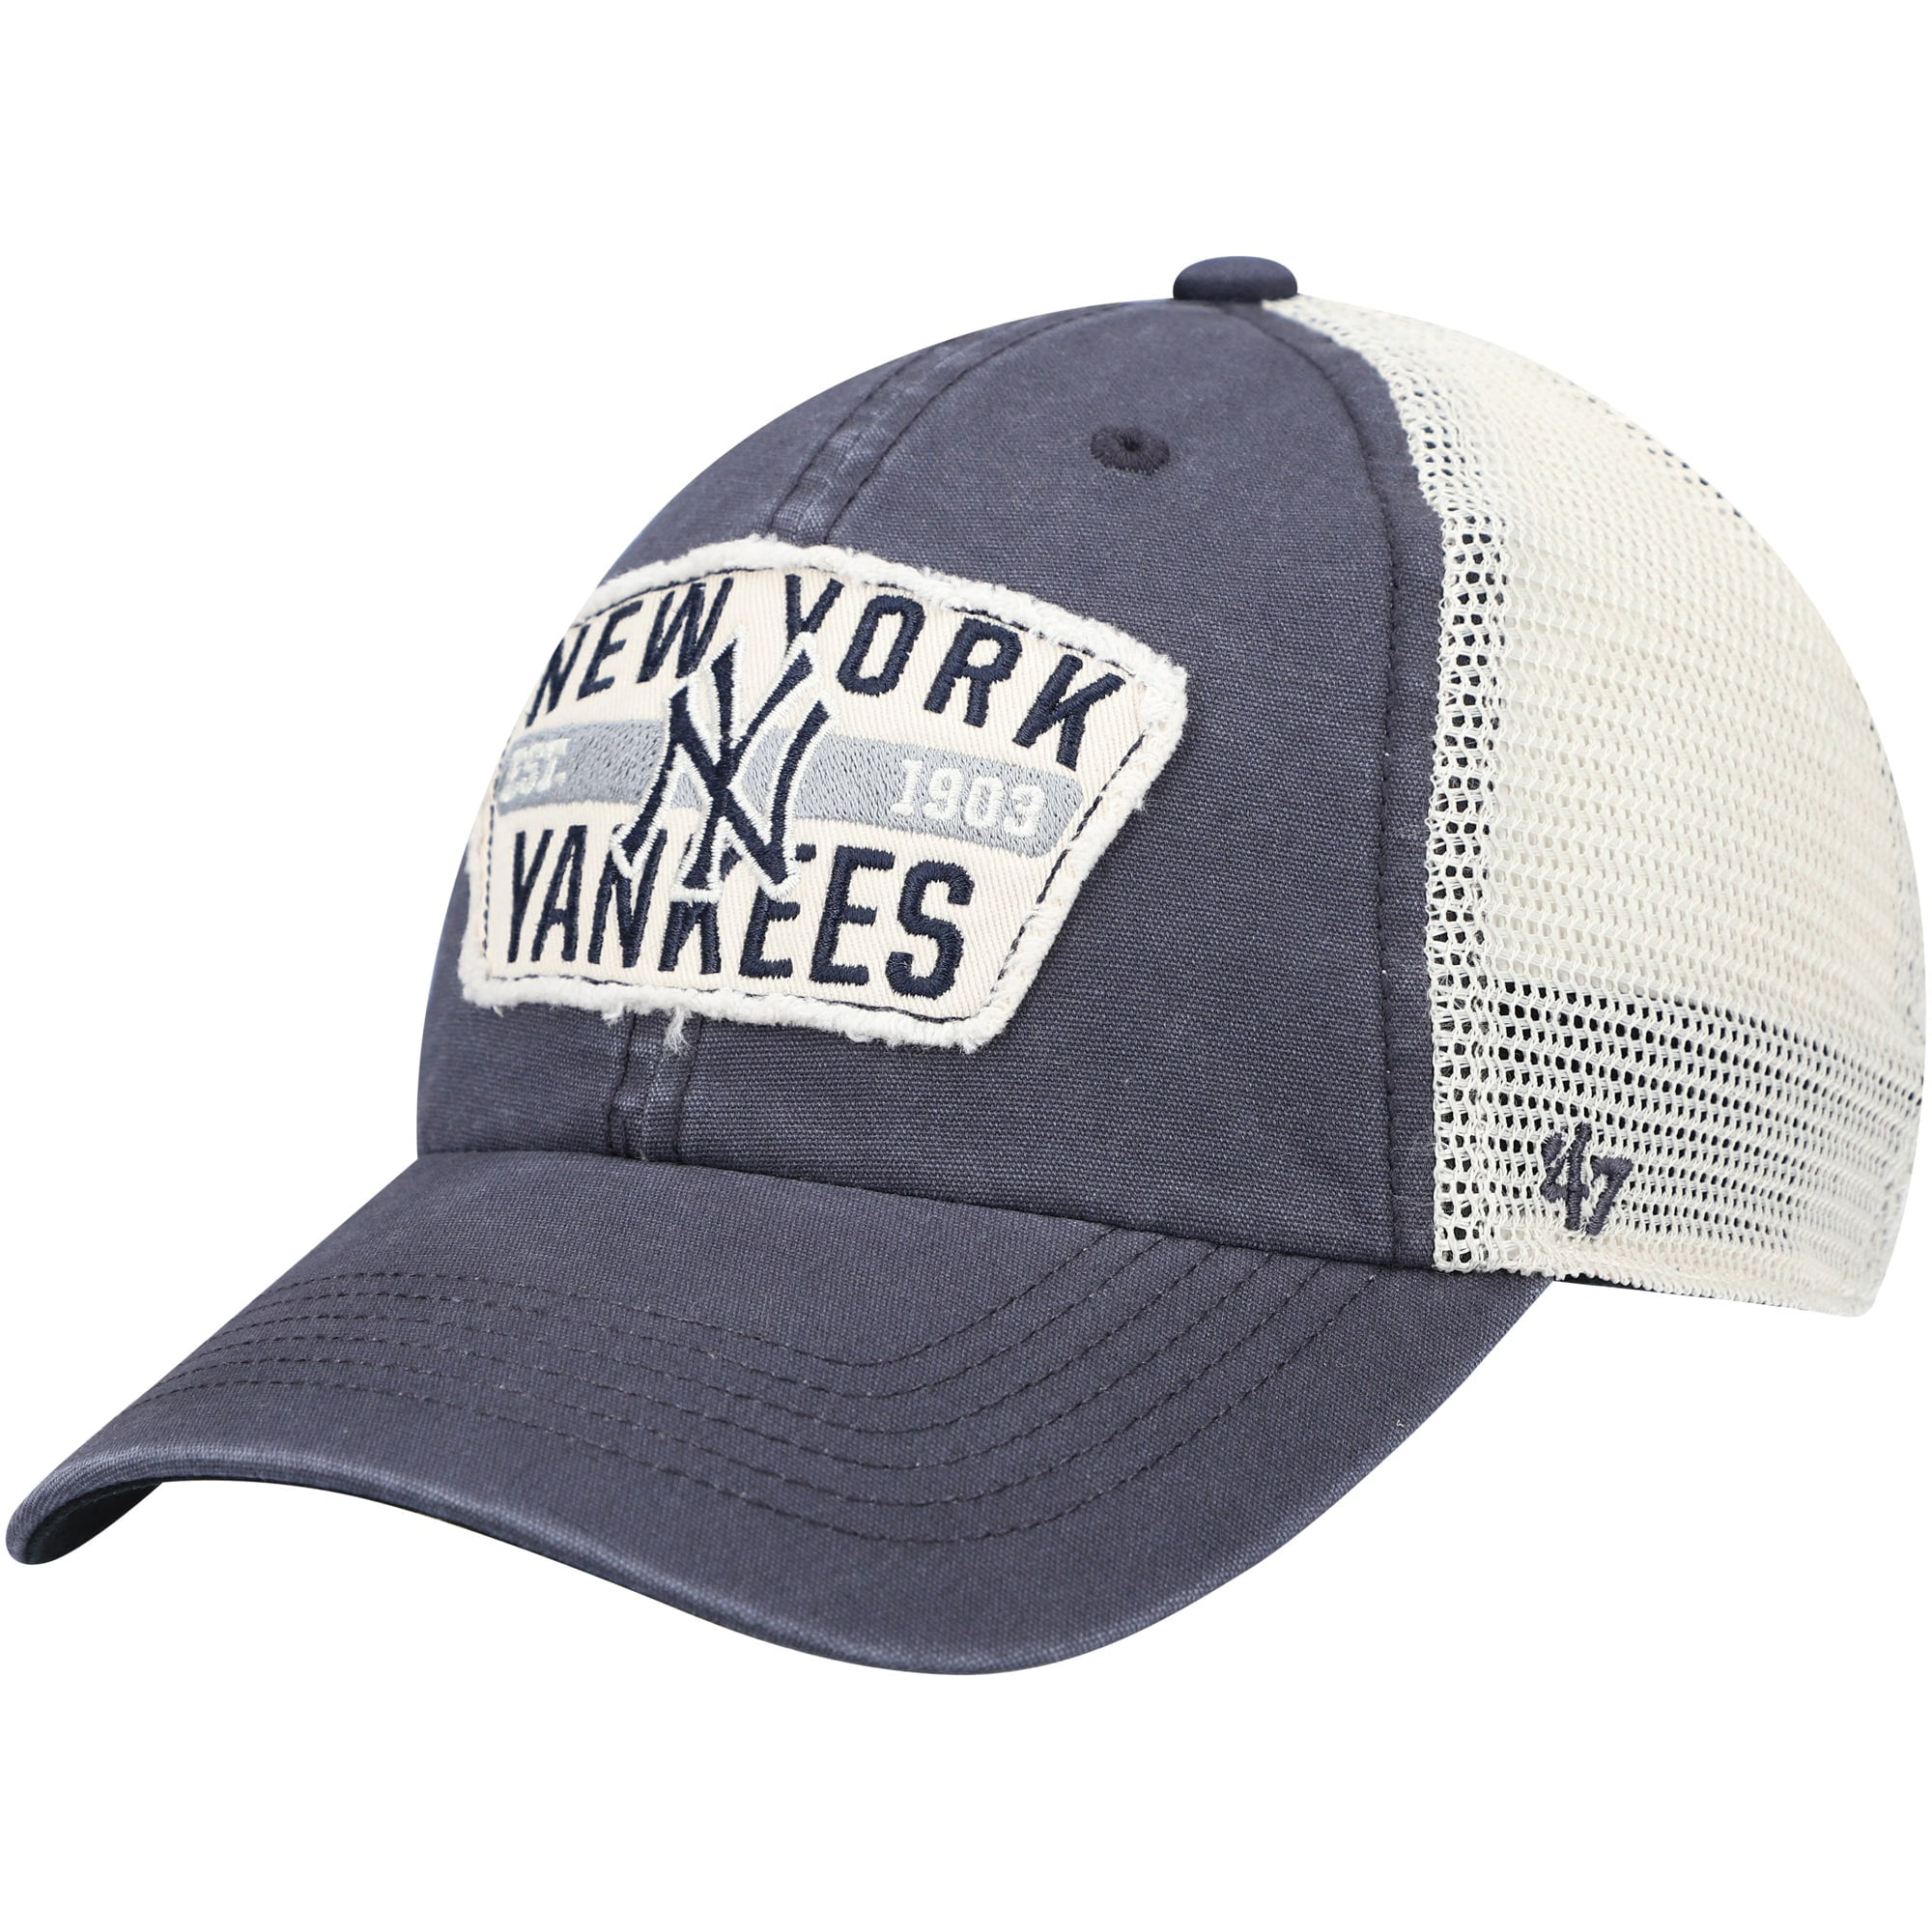 FLAGSHIP New York Yankees vintage 47 Brand Trucker Cap 